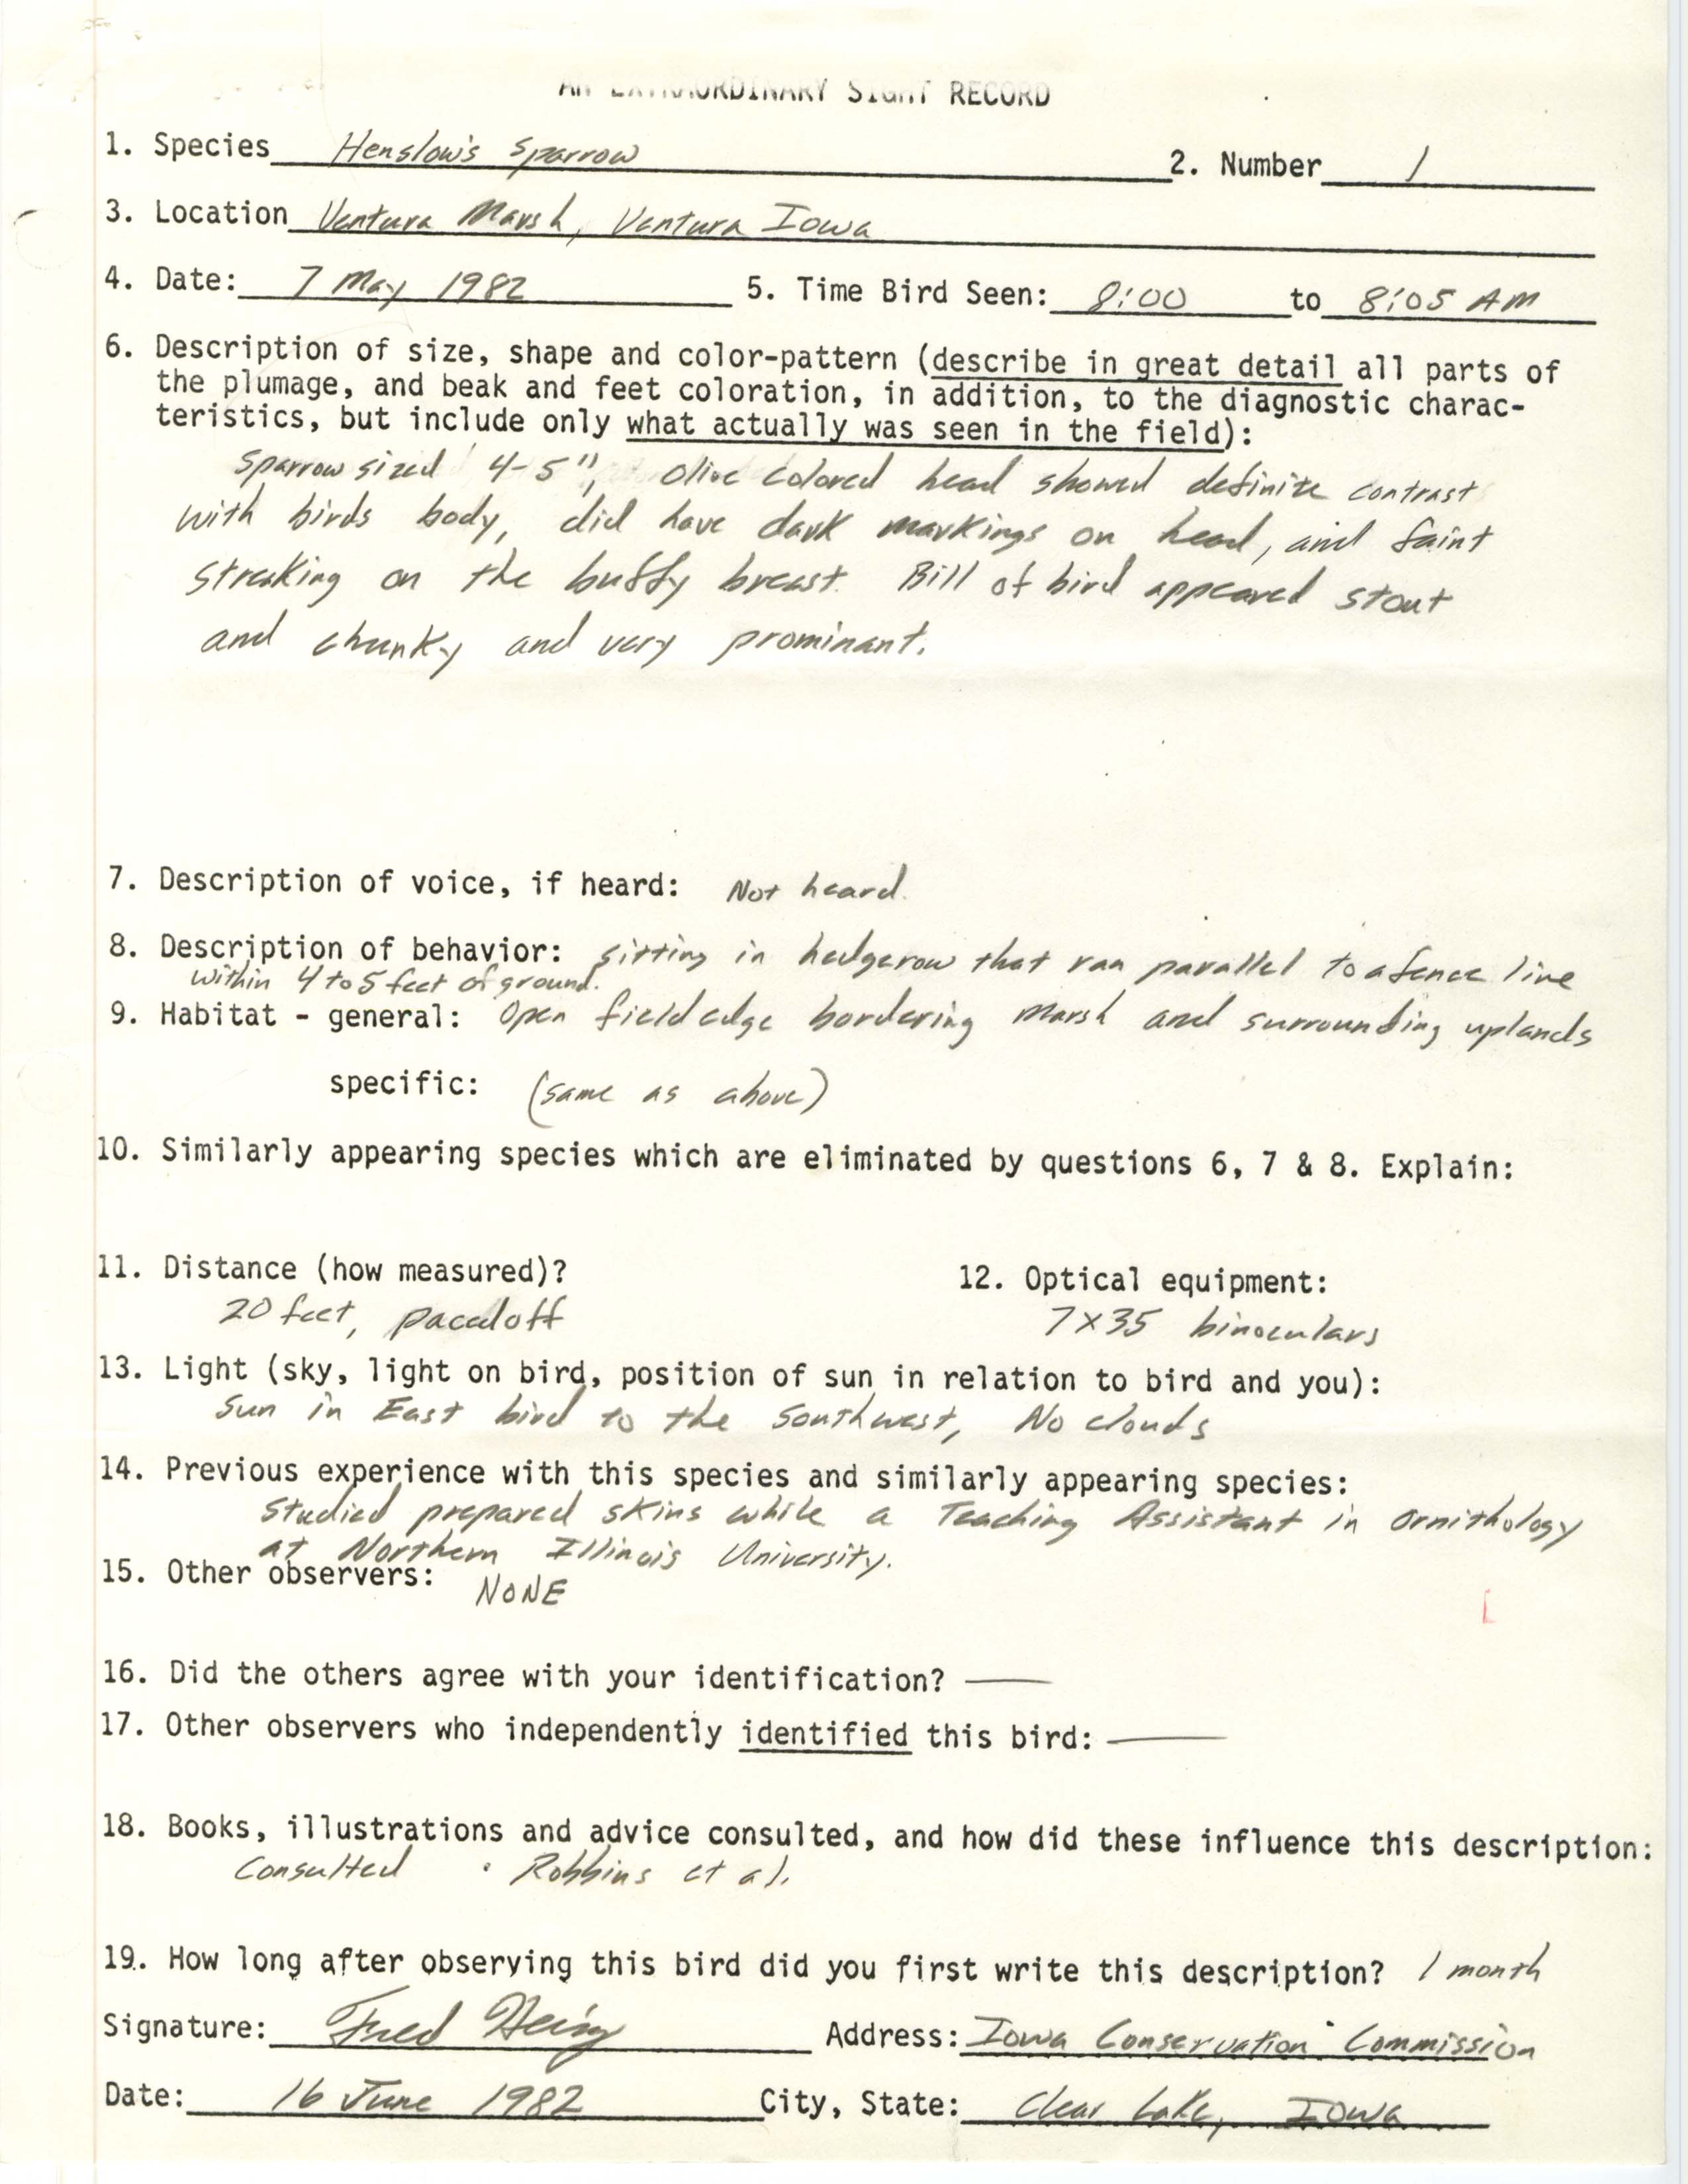 Rare bird documentation form for Henslow's Sparrow at Ventura Marsh, 1982